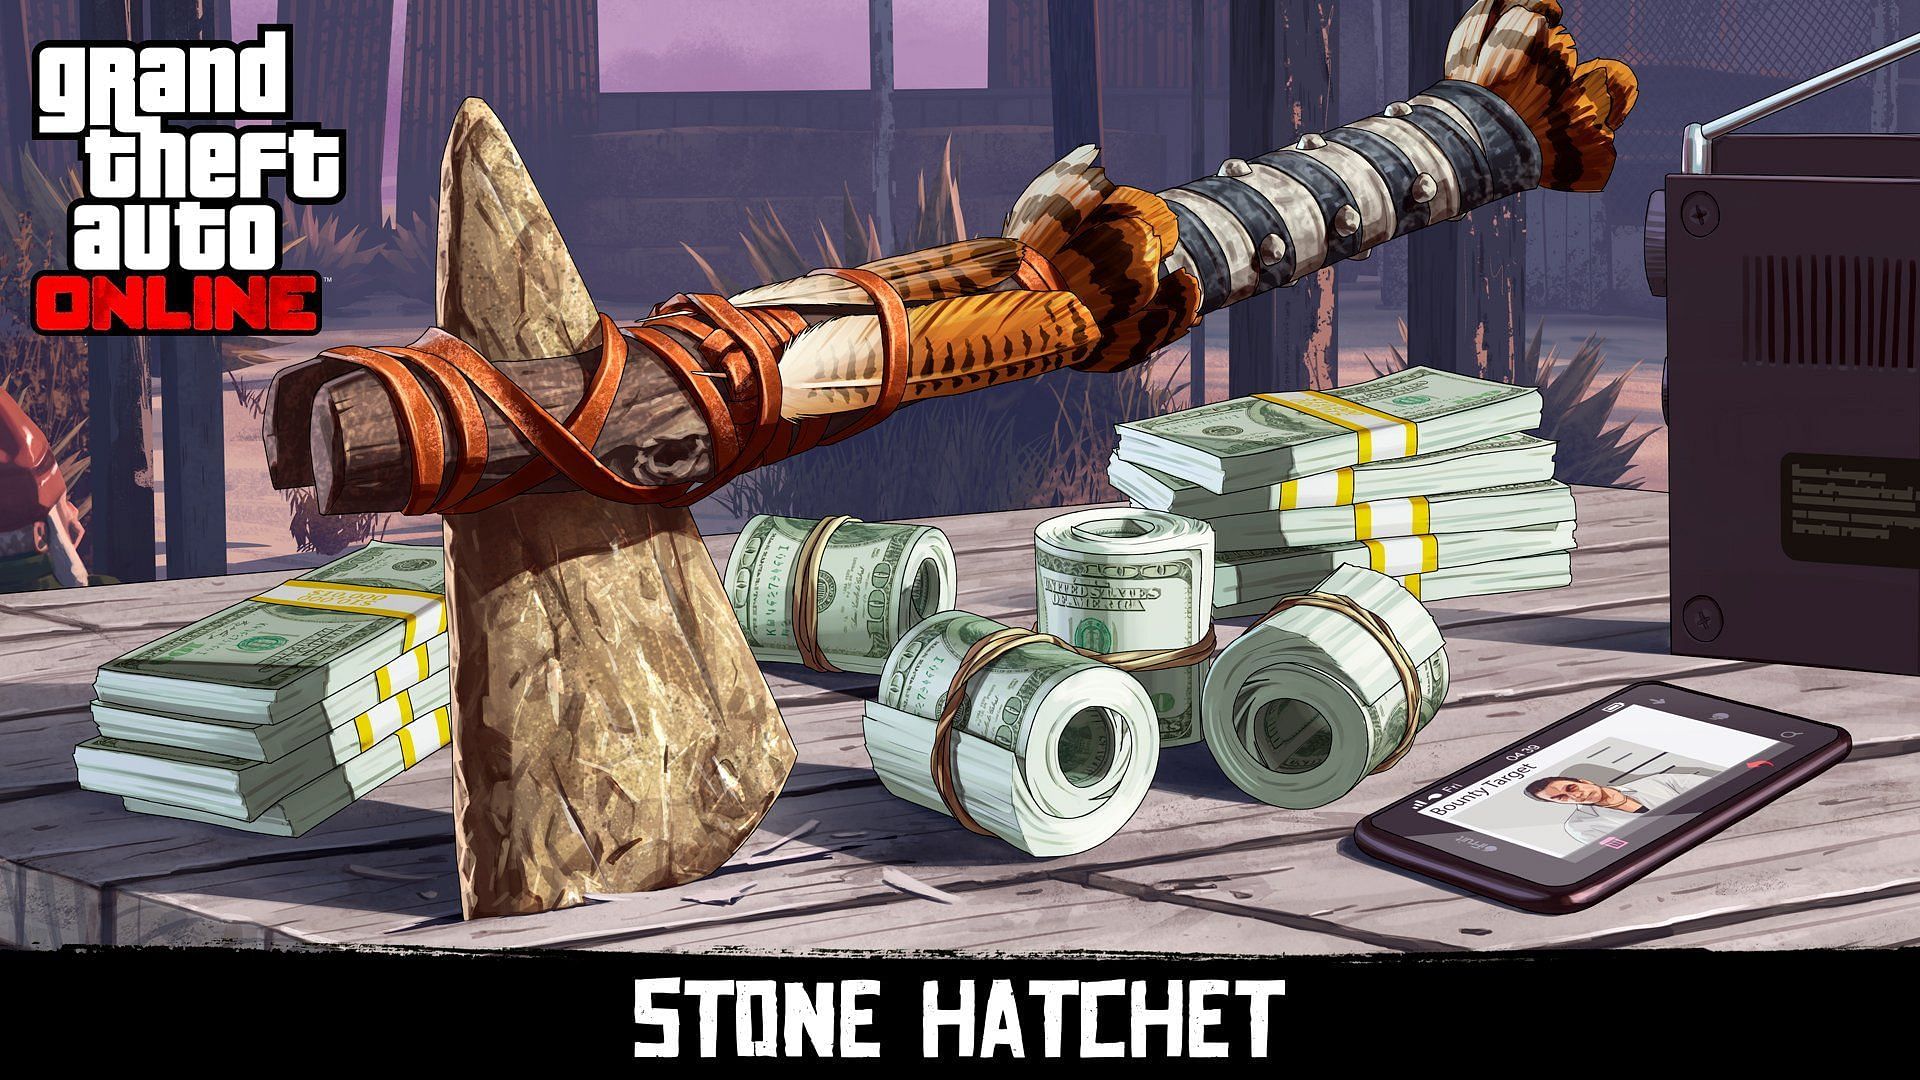 The Stone Hatchet in GTA Online (Image via Twitter @RockstarGames)